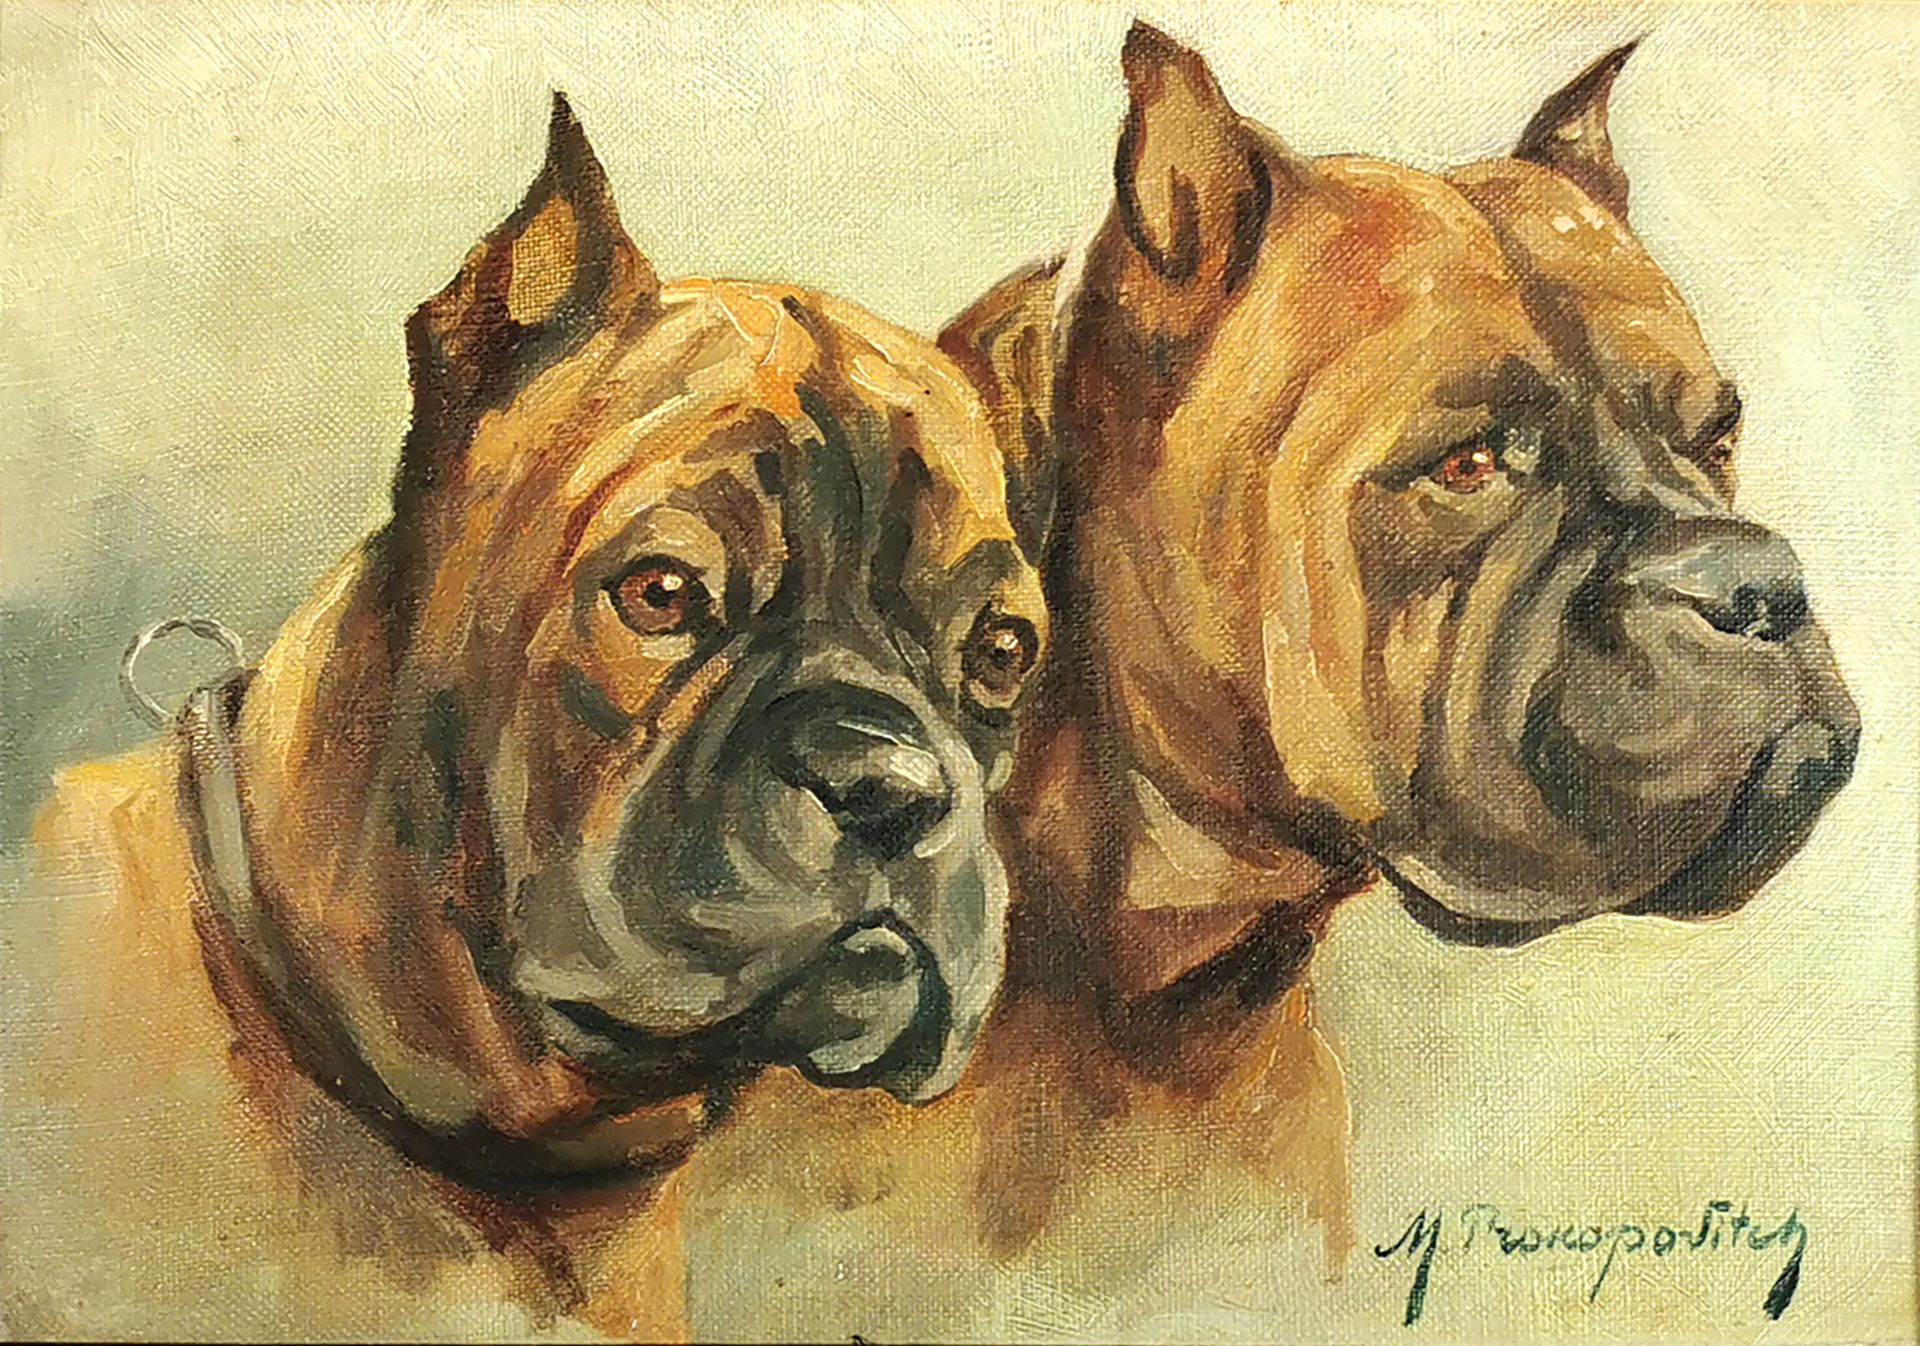 Null 迈克尔-普罗科波维奇 (约1850-1925)

大丹犬的画像

签名的布面油画

24 x 33 cm

有框